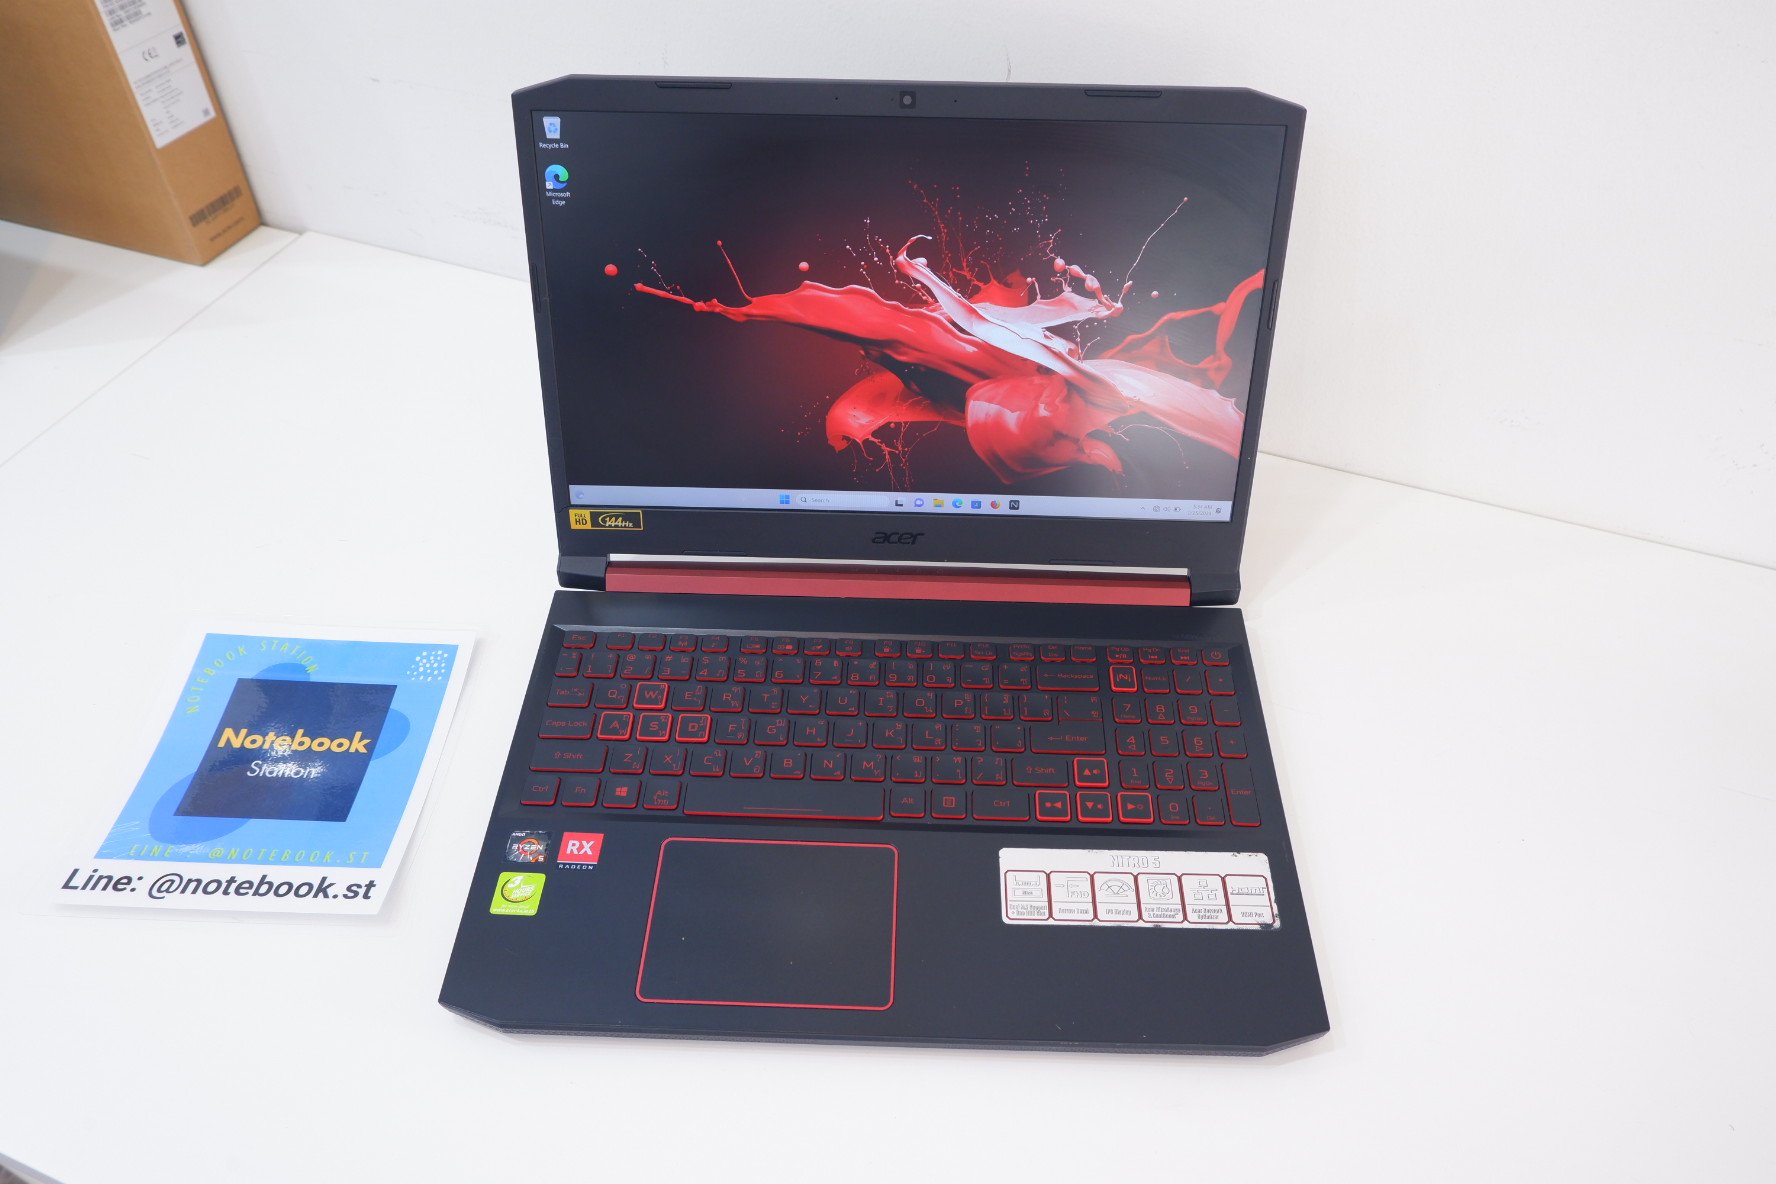 Acer Nitro 5 Ryzen5-3550H Ram8 RX560X(4GB) SSD512 จอ15.6 ips 144Hz ภาพสวยคมชัด คีย์บอร์ดไฟสีแดง เครื่องพร้อมใช้งาน เพียง 9,990.-